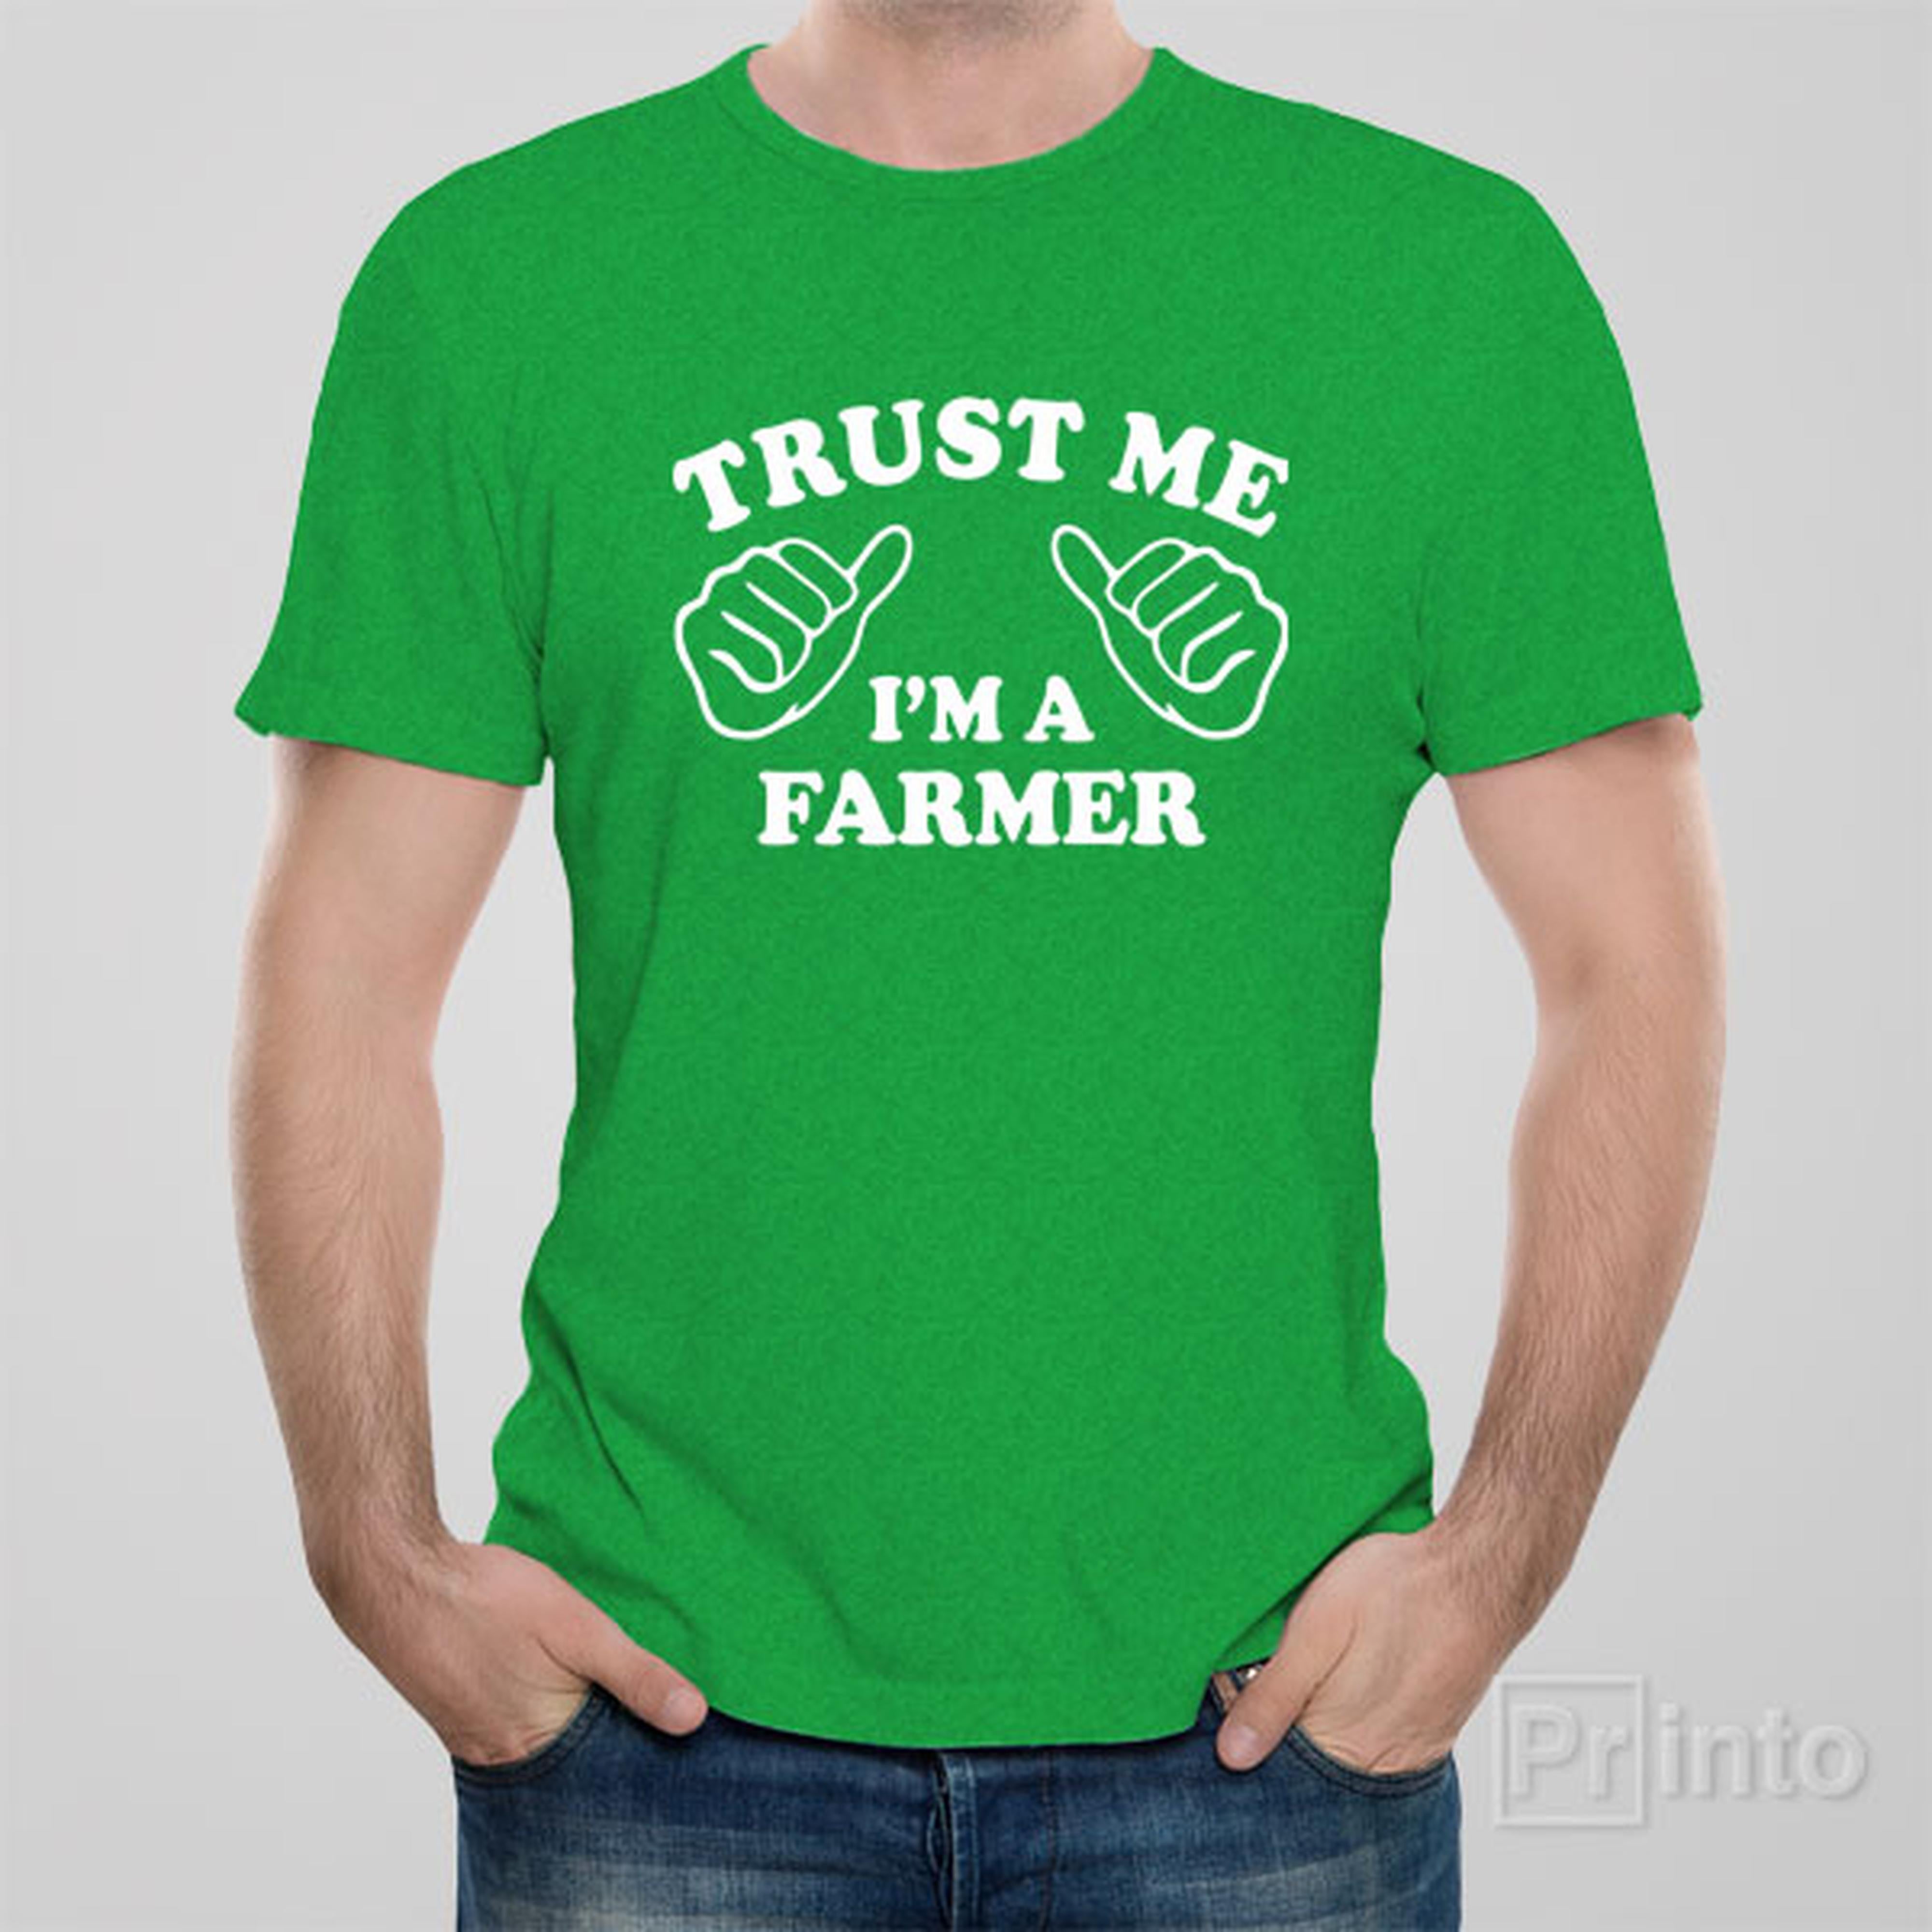 trust-me-i-am-a-farmer-t-shirt